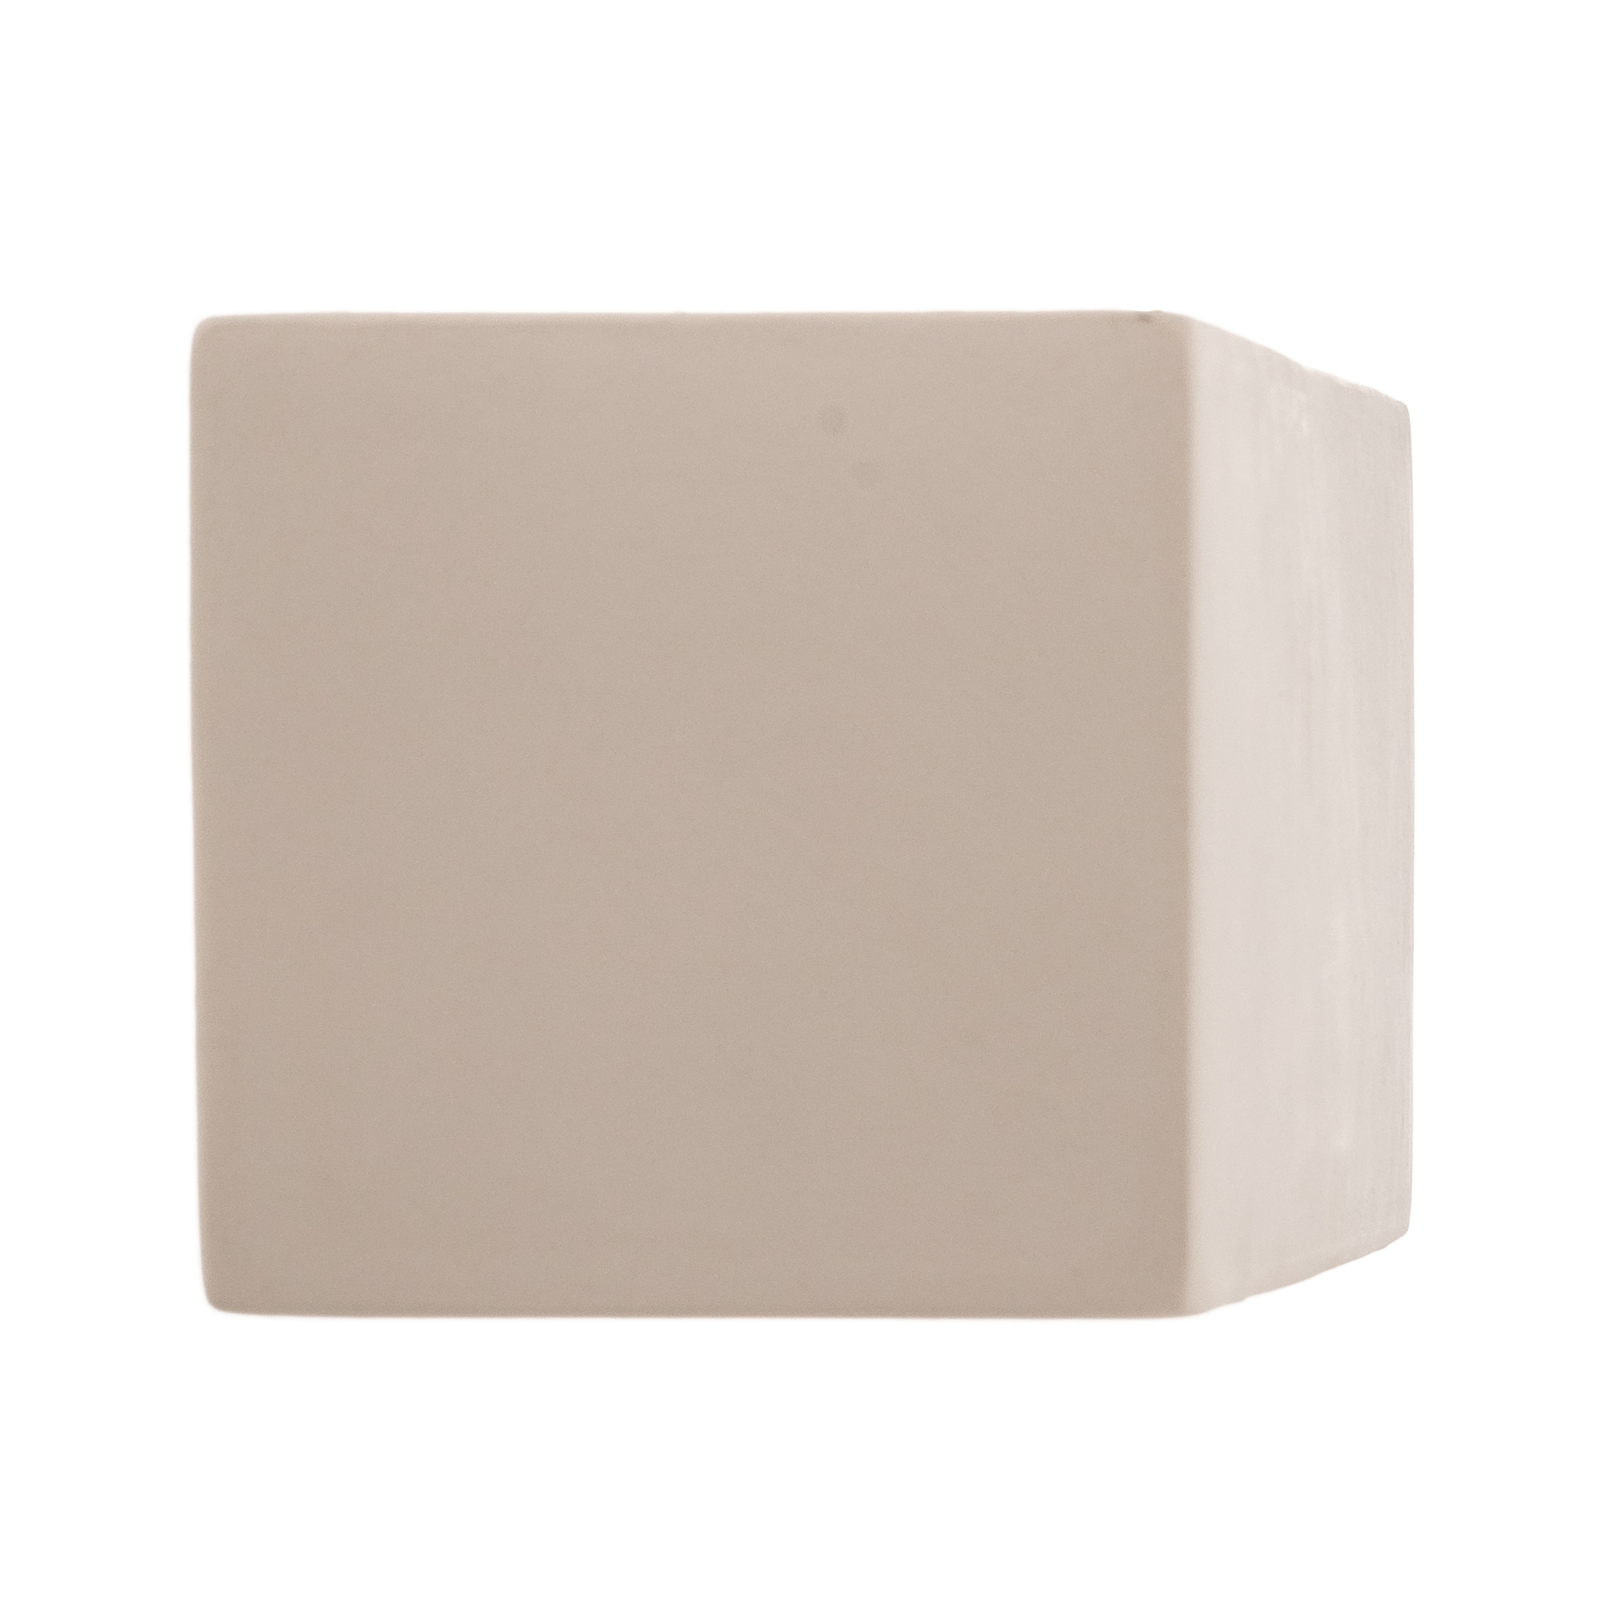 Aplique Cube Line up/down de cerámica, blanco